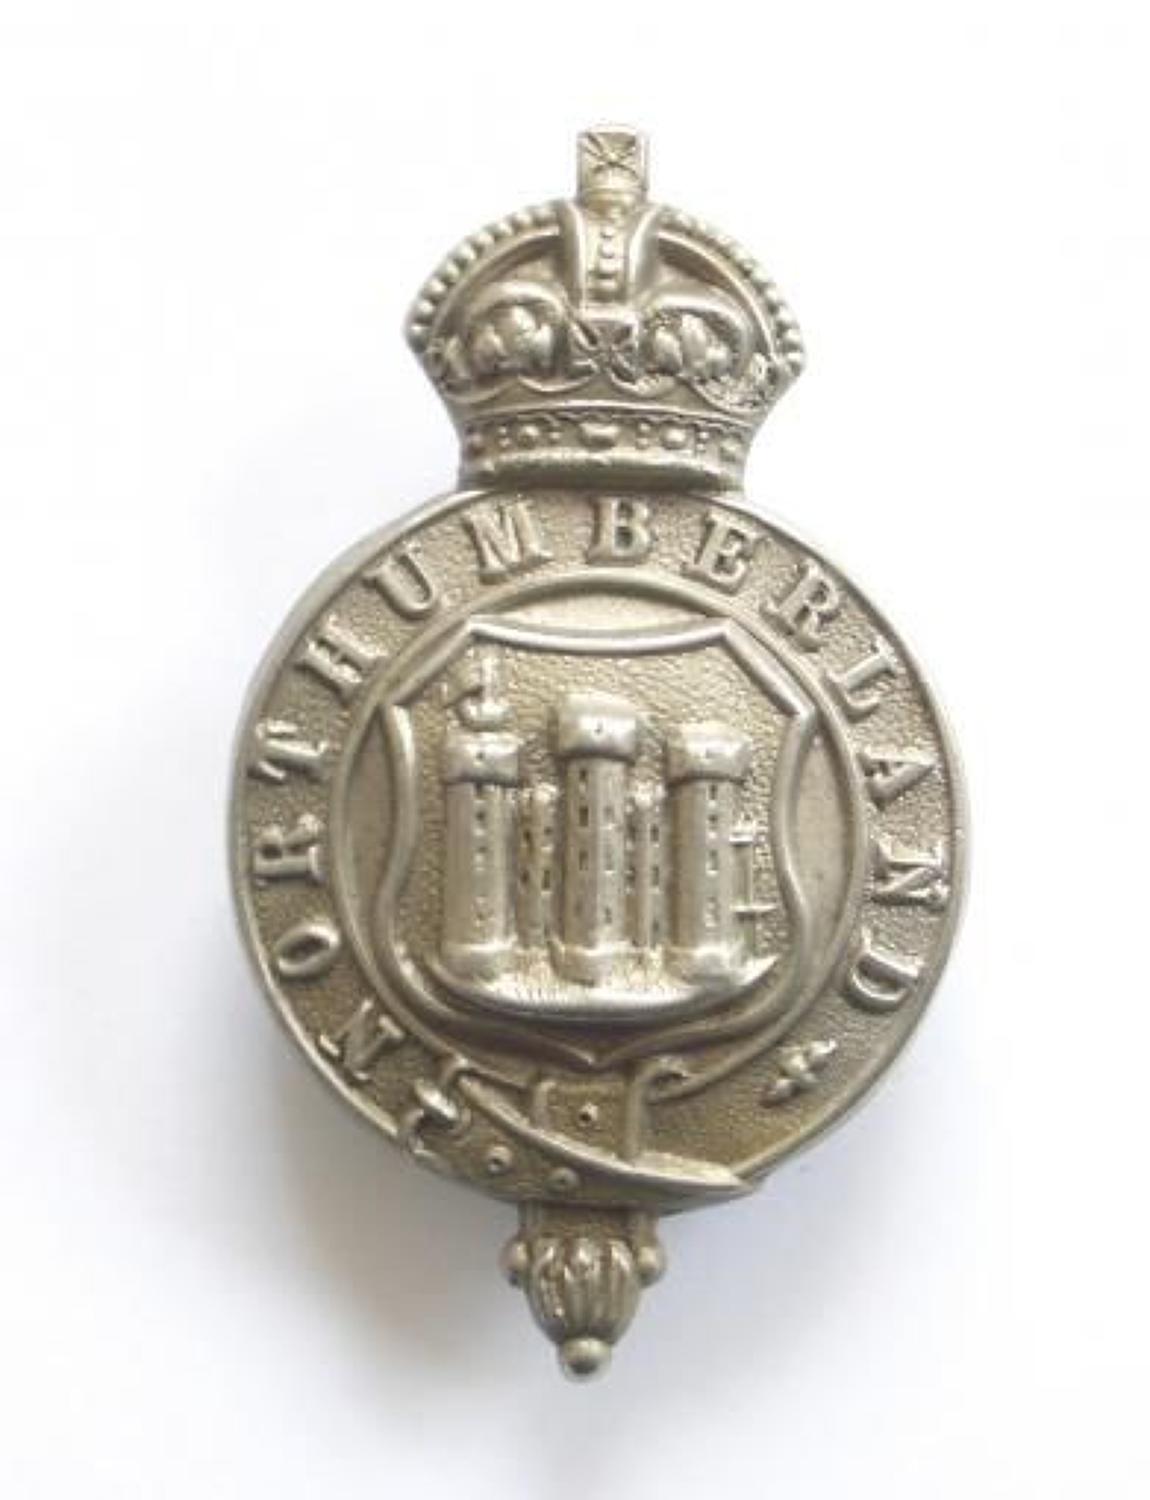 Northumberland Police Cap Badge, probaby Edwardian